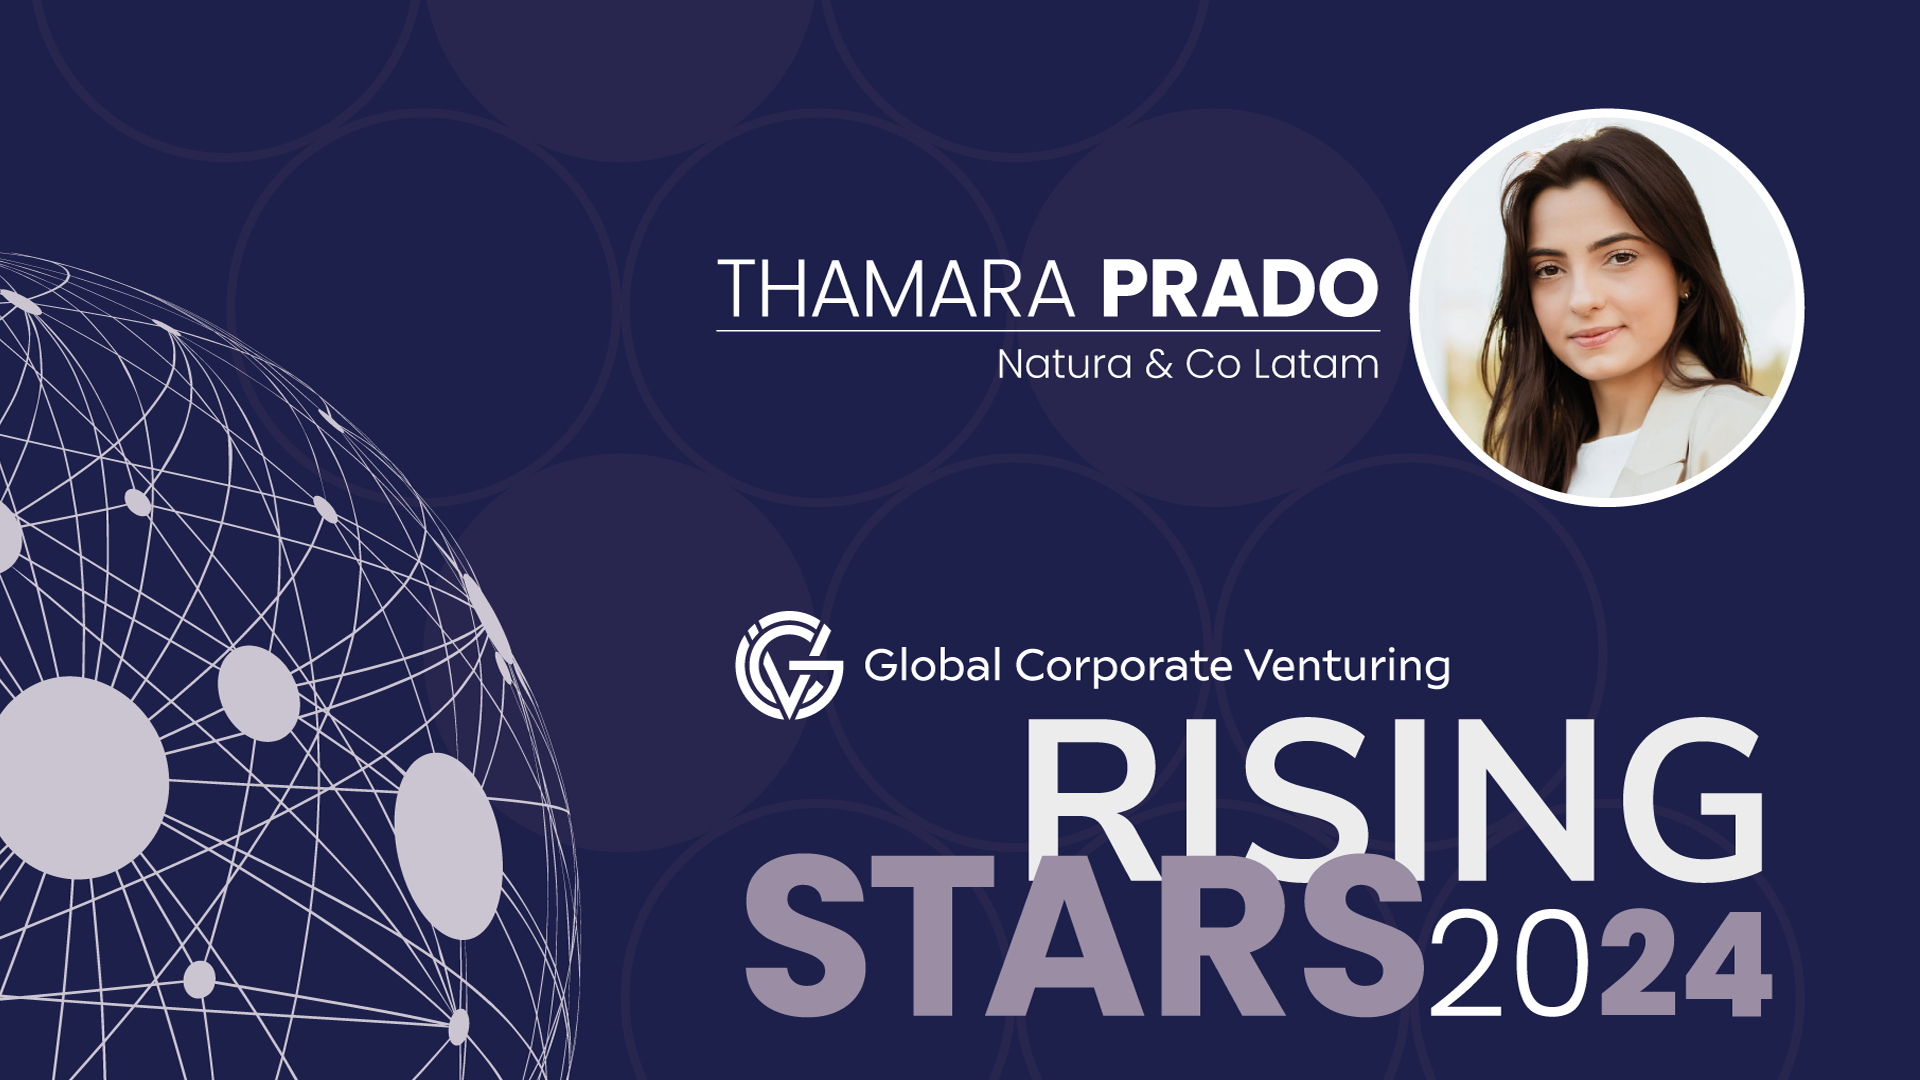 Thamara Prado, corporate venturing manager, Natura & Co Latam